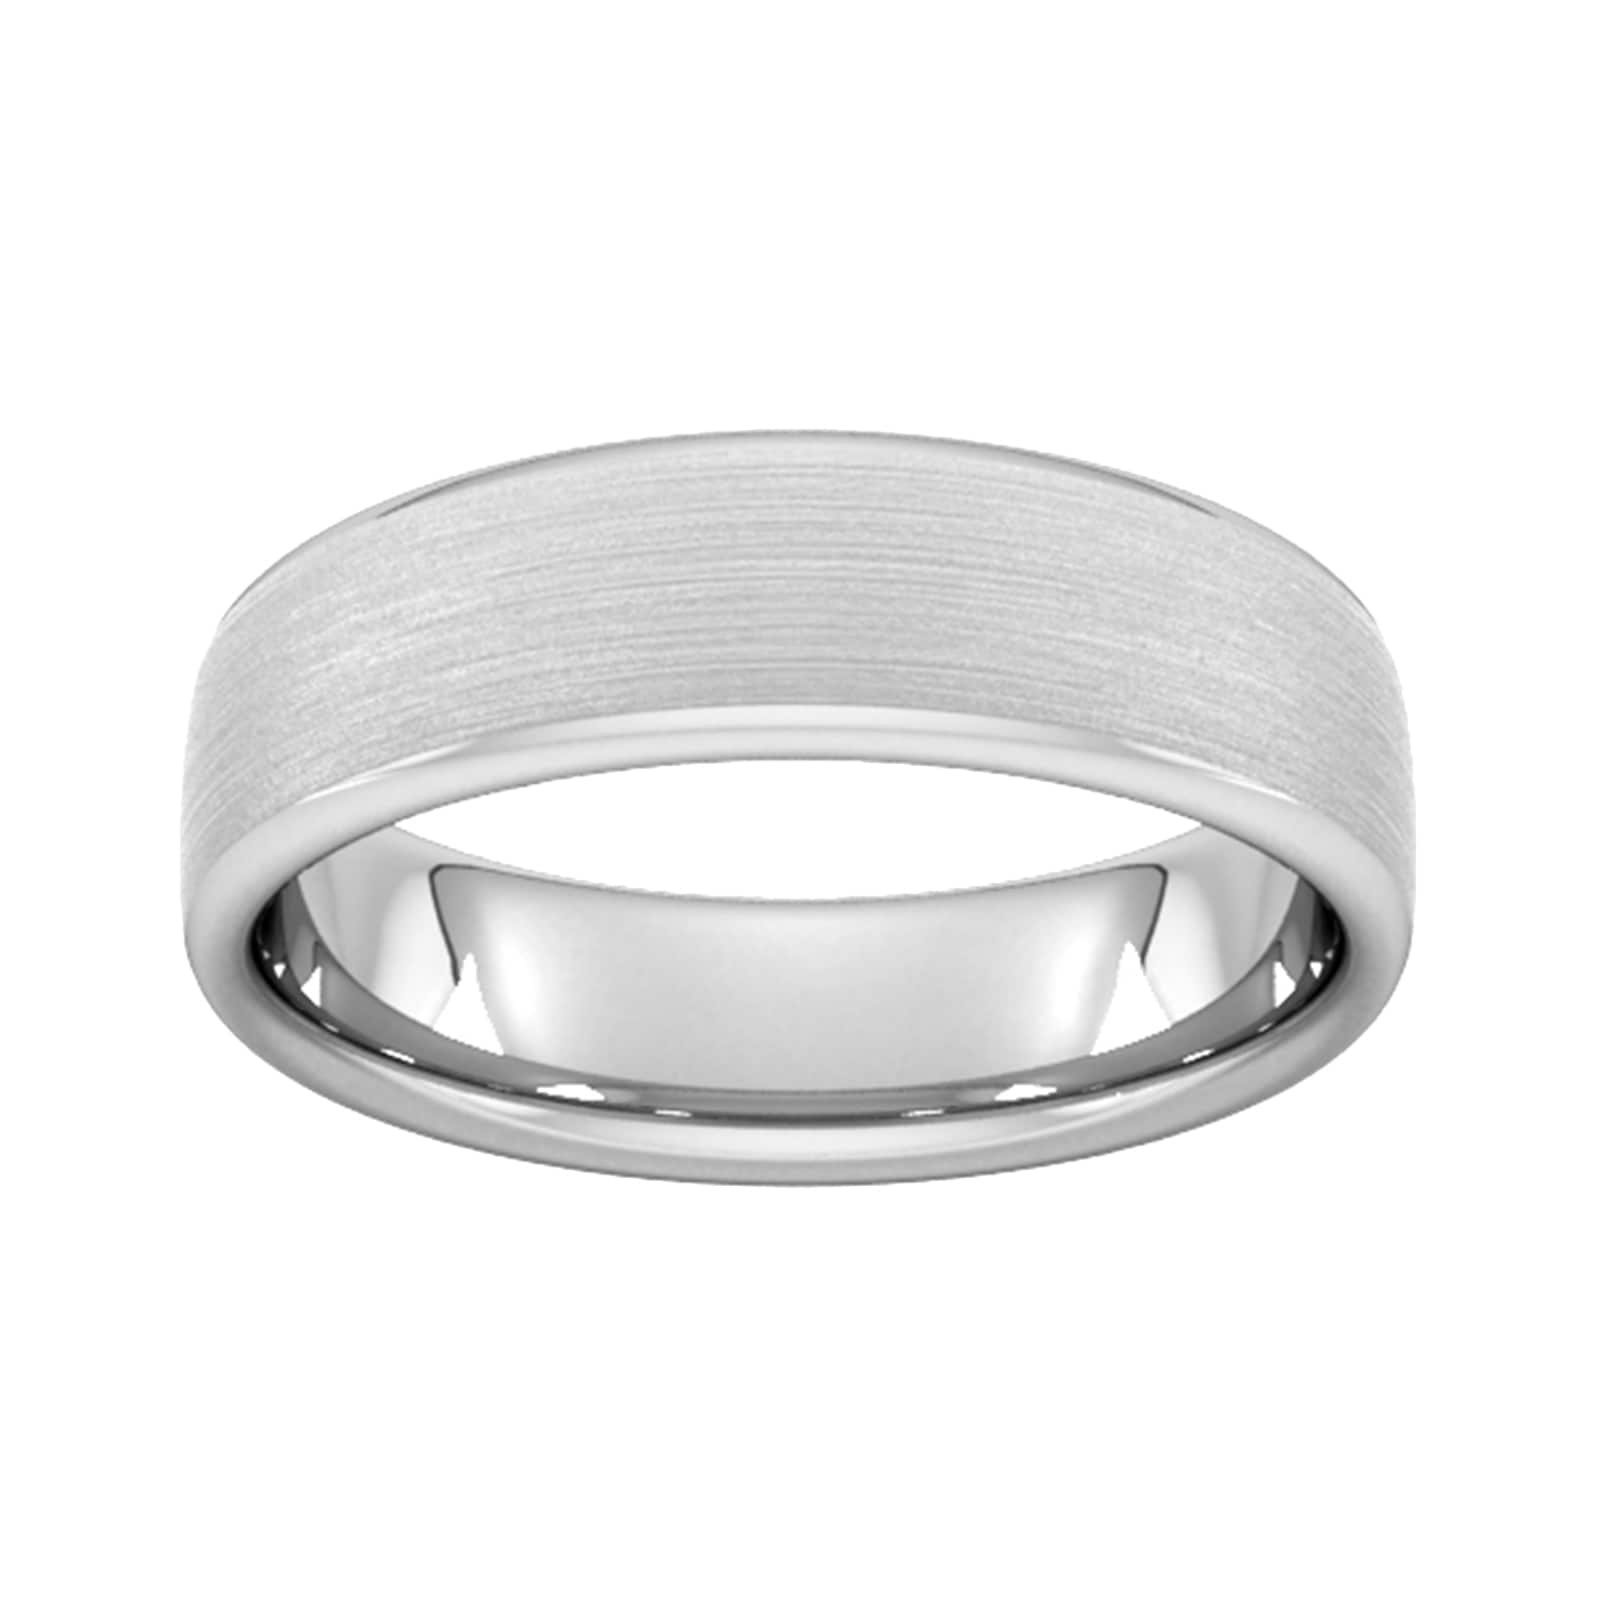 6mm Slight Court Standard Matt Finished Wedding Ring In 950 Palladium - Ring Size U